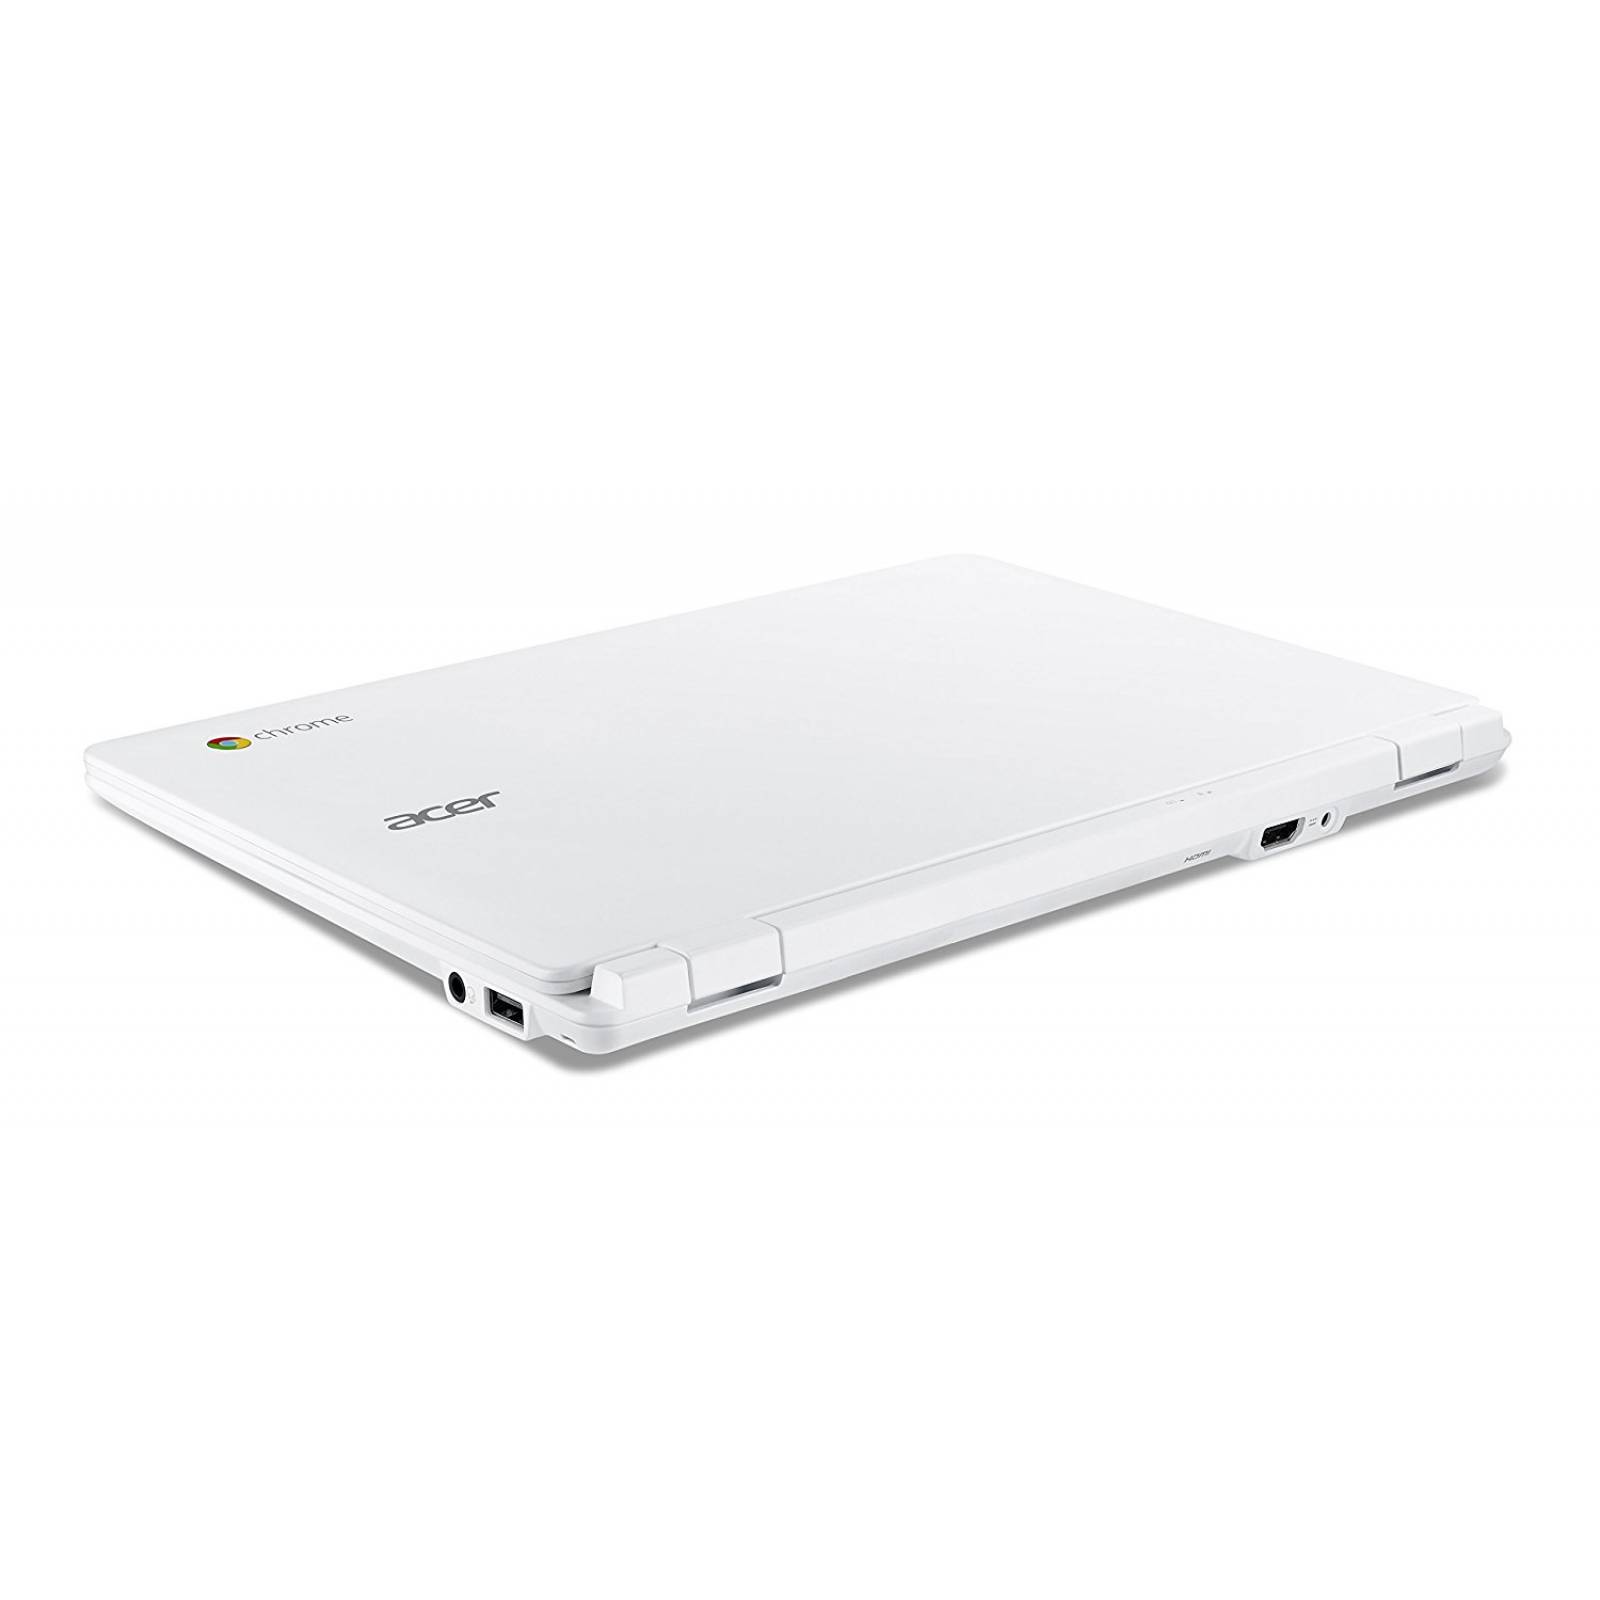 Laptop Acer Chromebook Cb3 11.6 Celeron 2gb 16gb Ssd -blanco